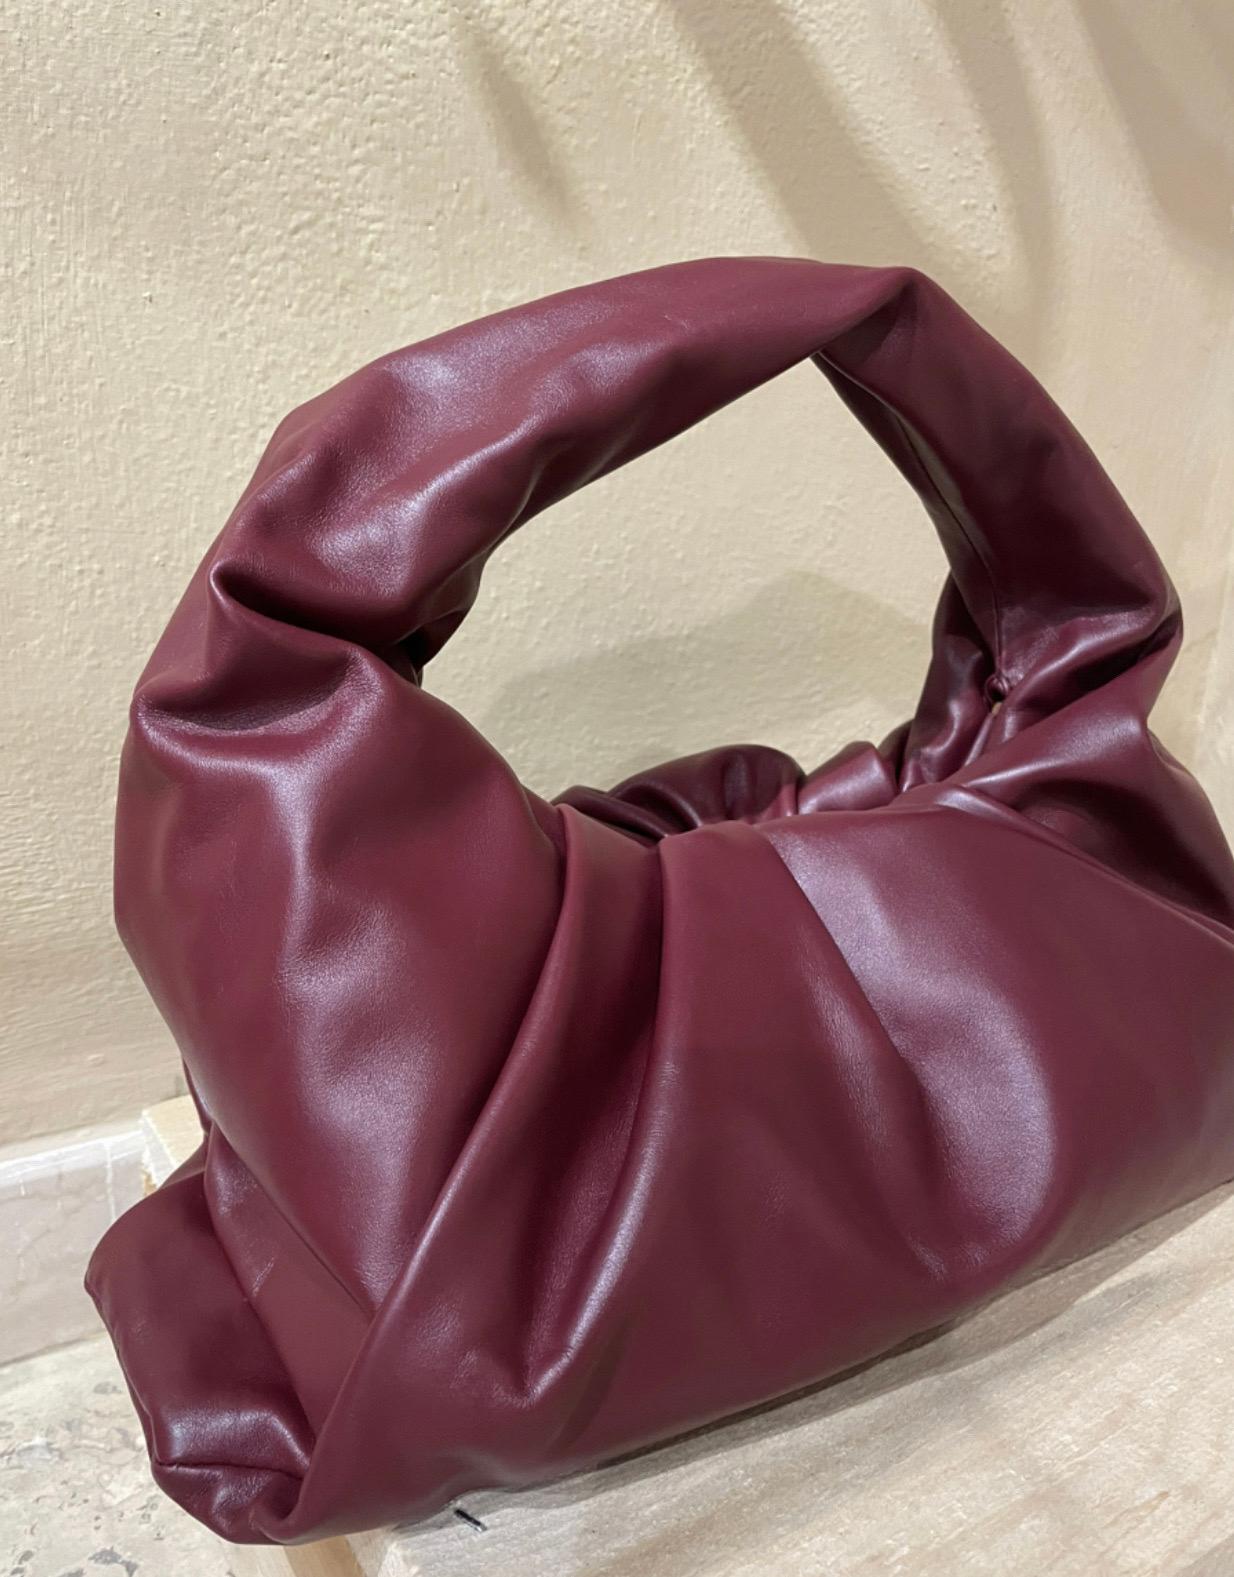 Bottega Veneta shoulder pouch bag in burgundy leather.
Length 38 cm
Height 12cm
Handle 15 cm
Width 16 cm
New, never been used. With original dust bag. 